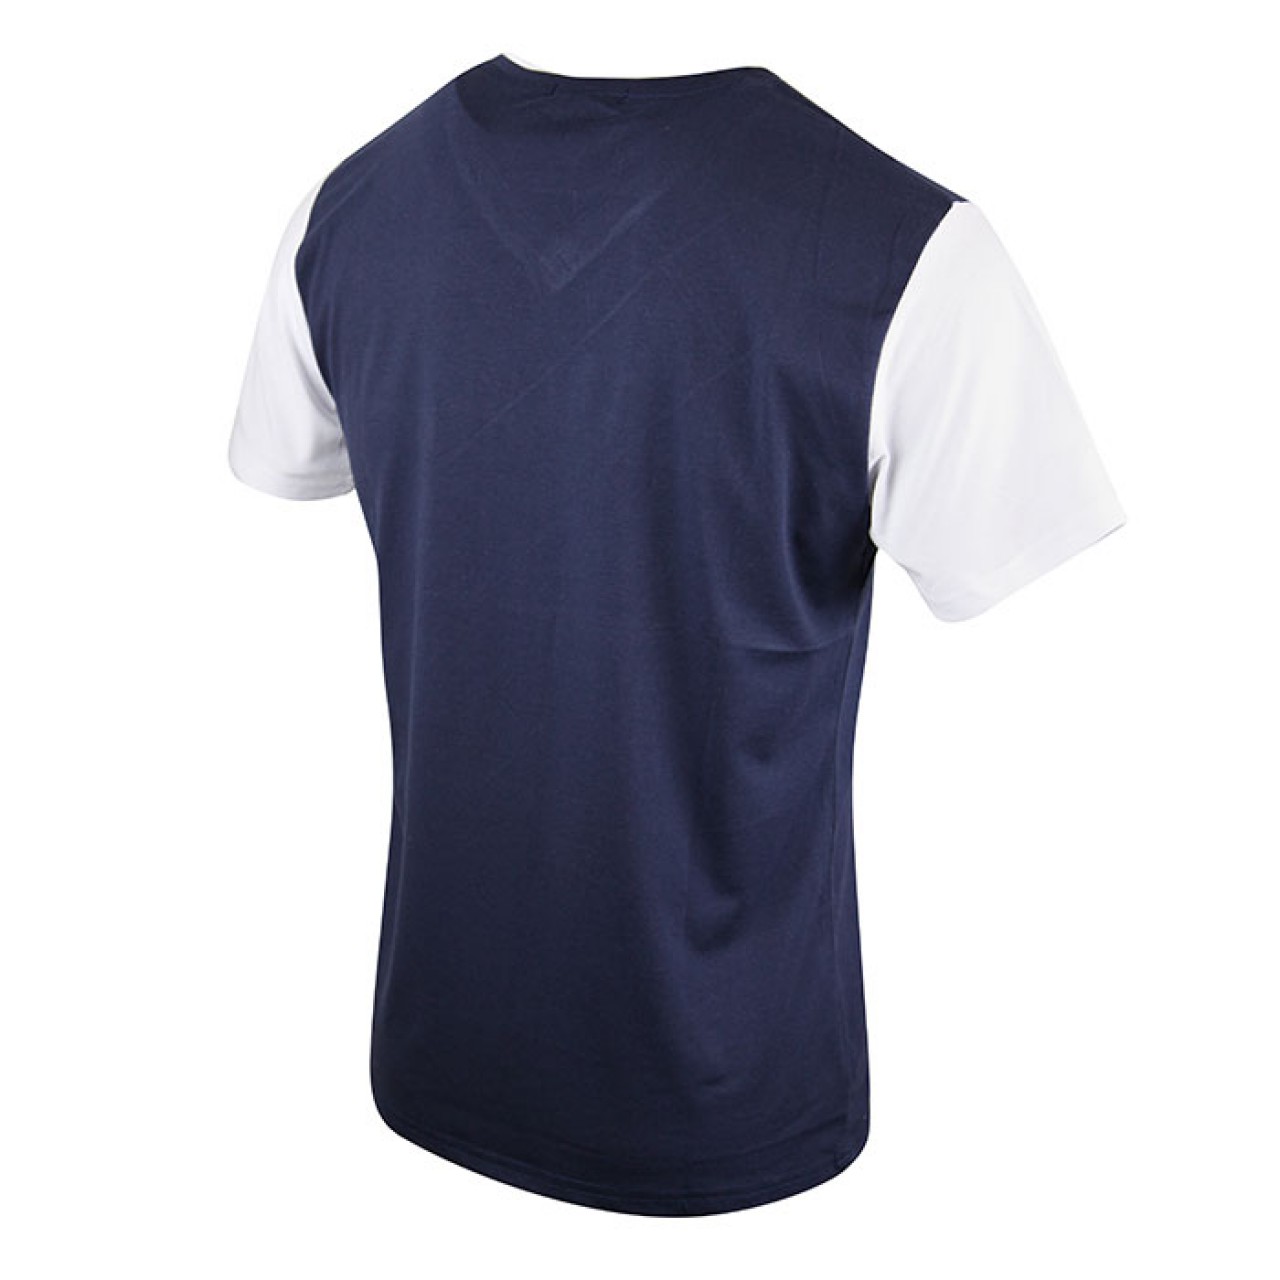 Navy Blue V Neck Tee Shirt With Pocket Stripe Design Pattern